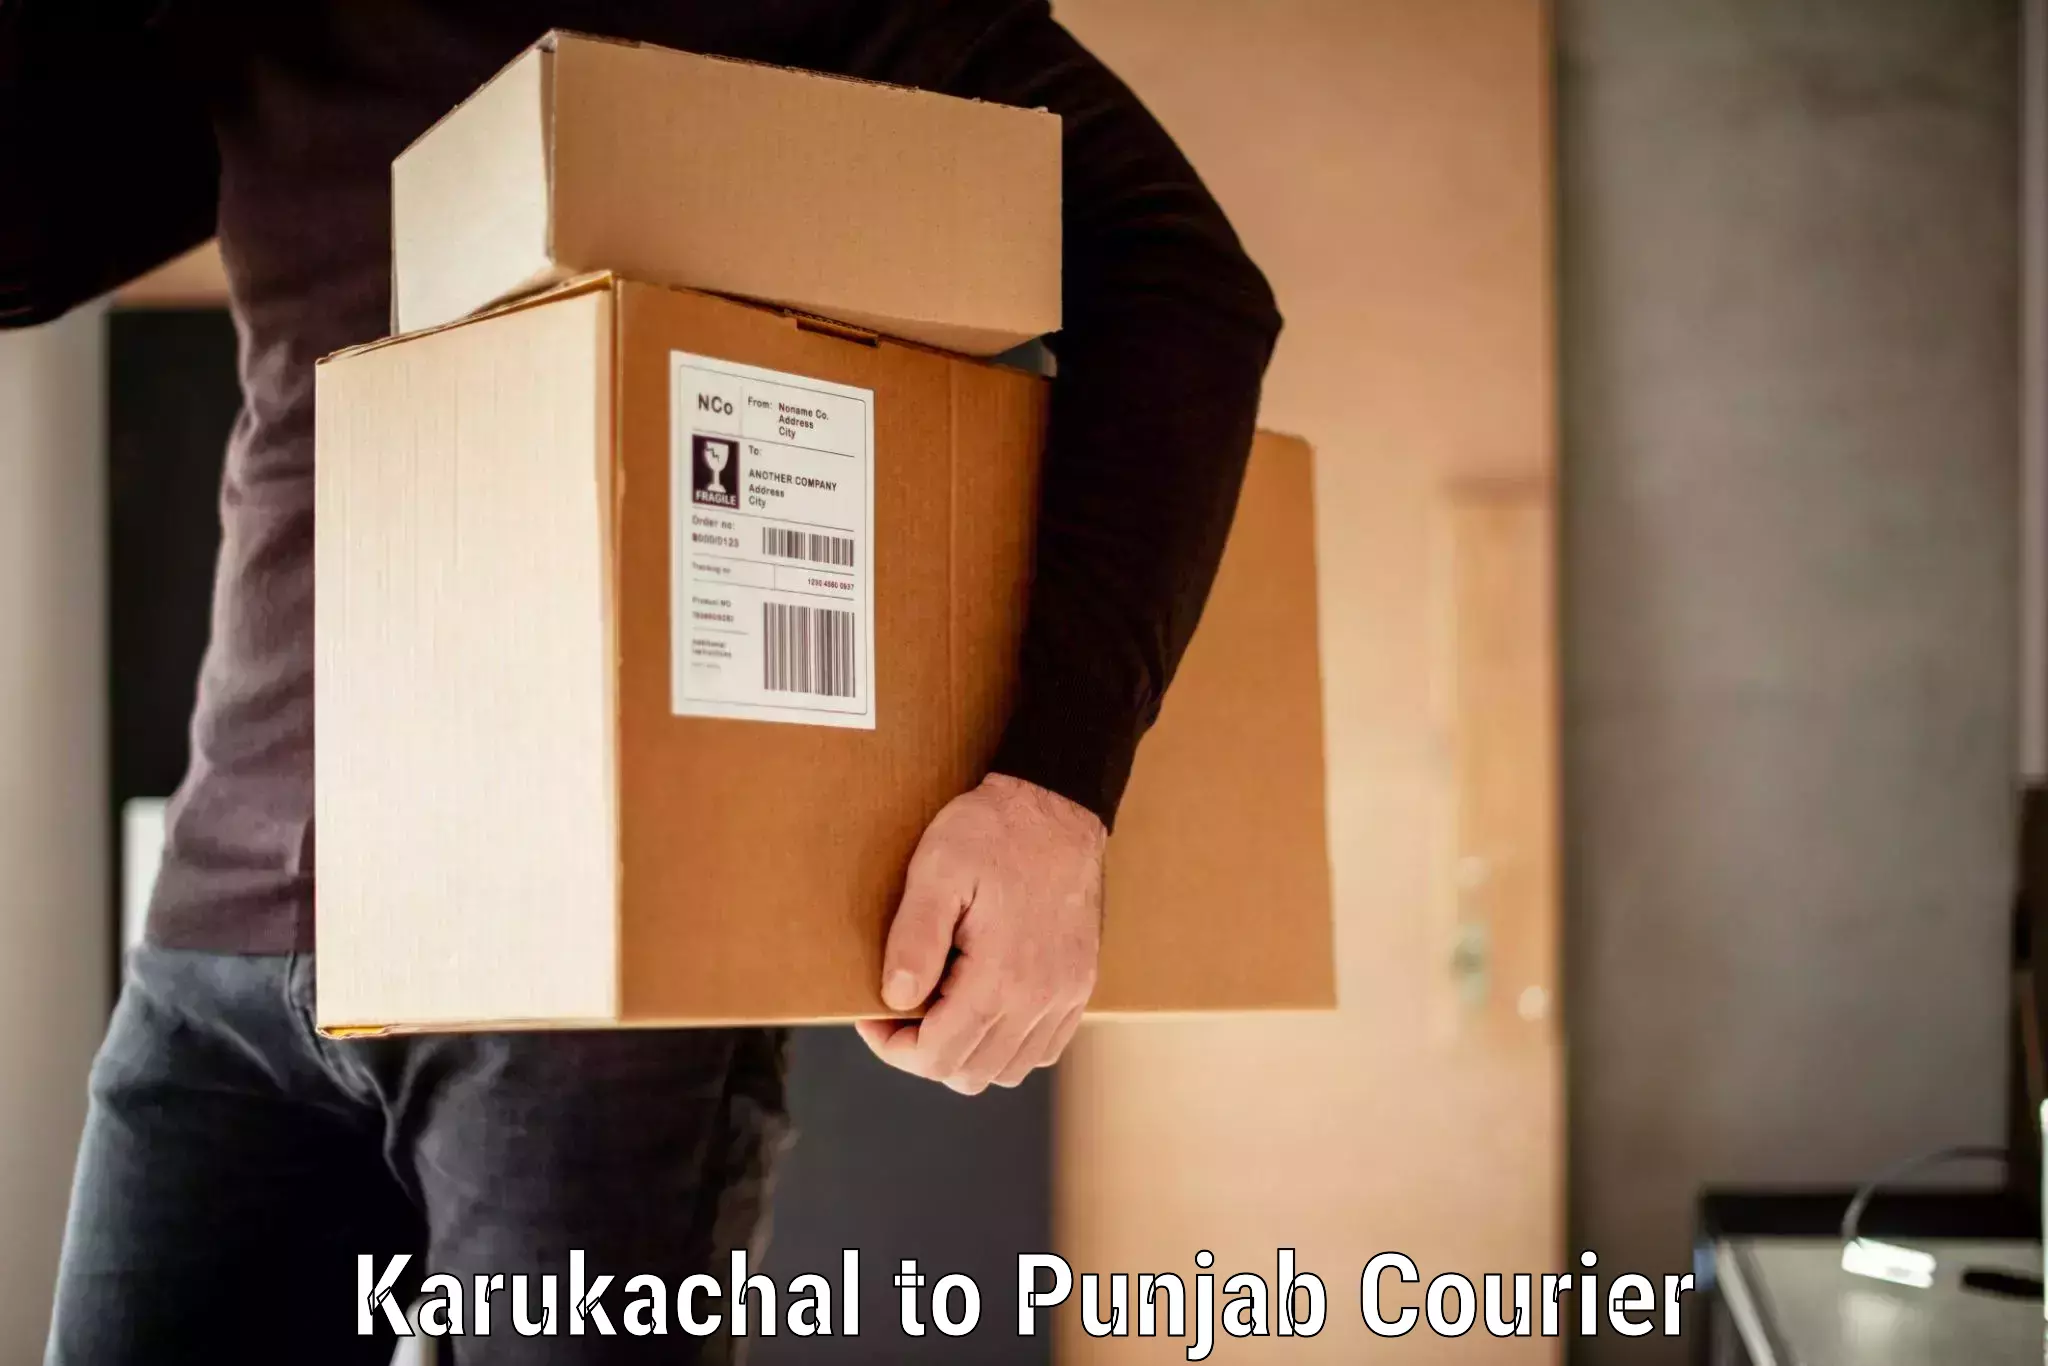 Luggage delivery app Karukachal to Dera Bassi